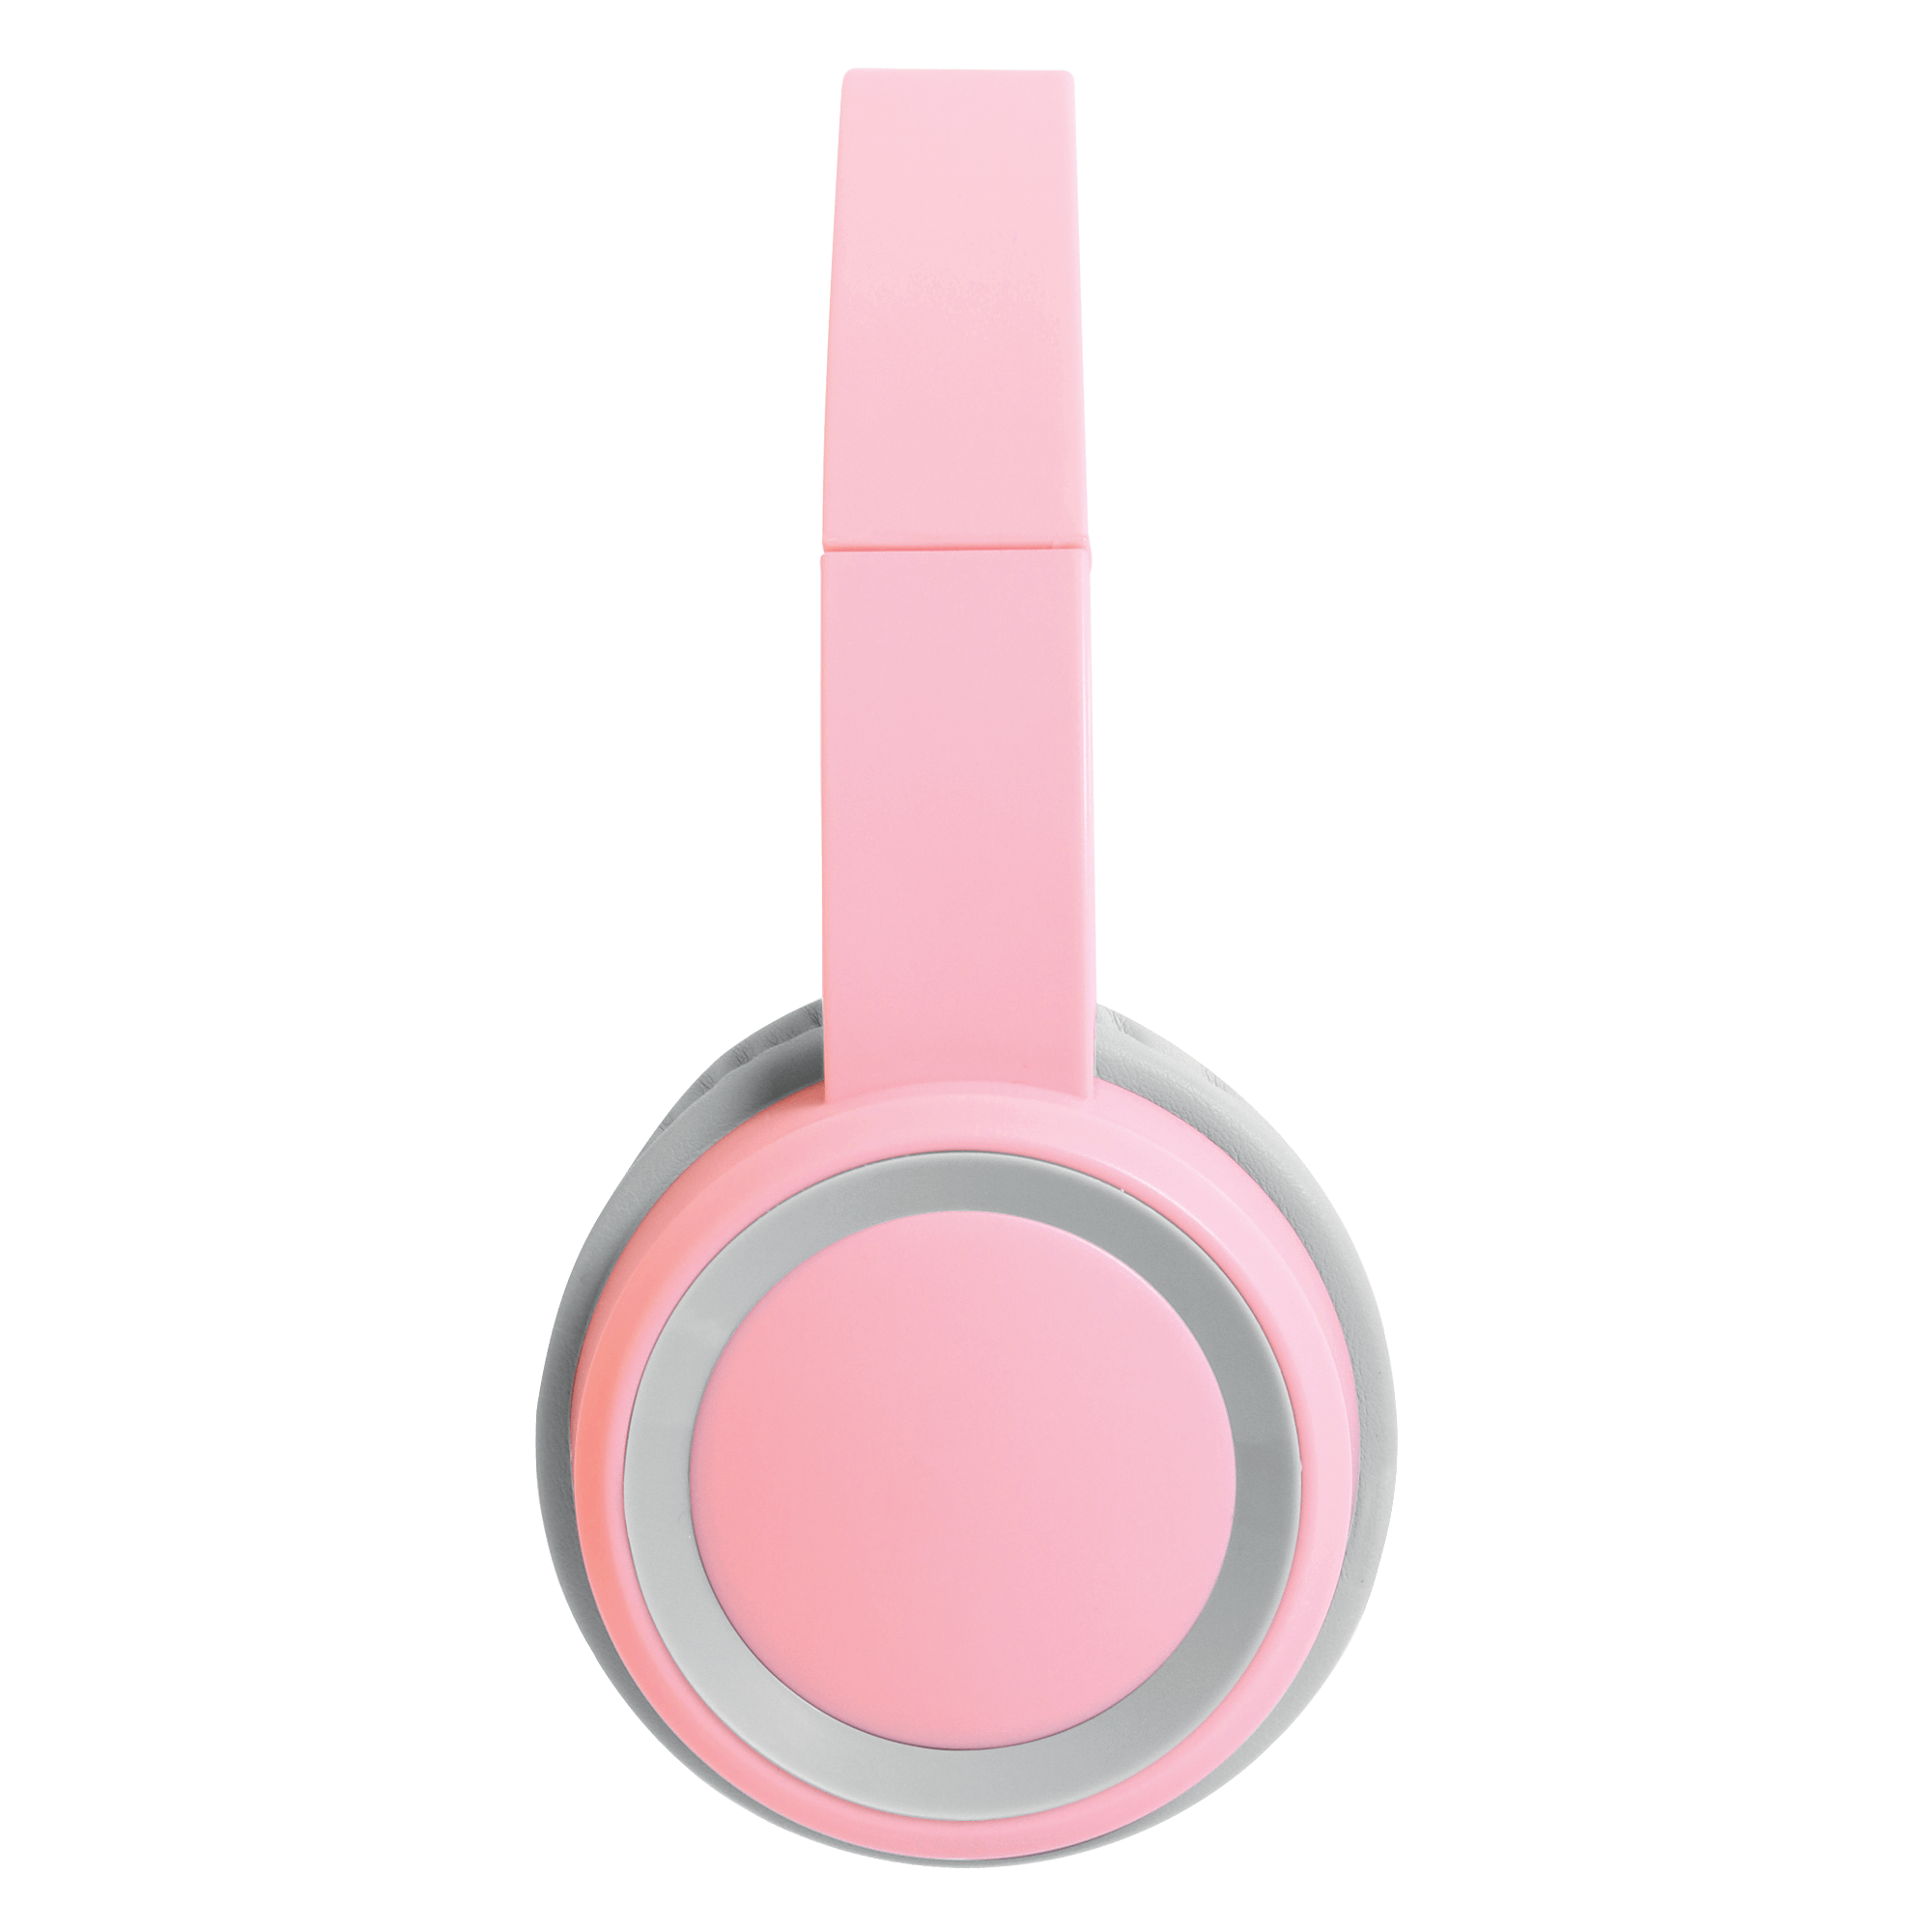 KIDZ WIRELESS On-Ear Headphones